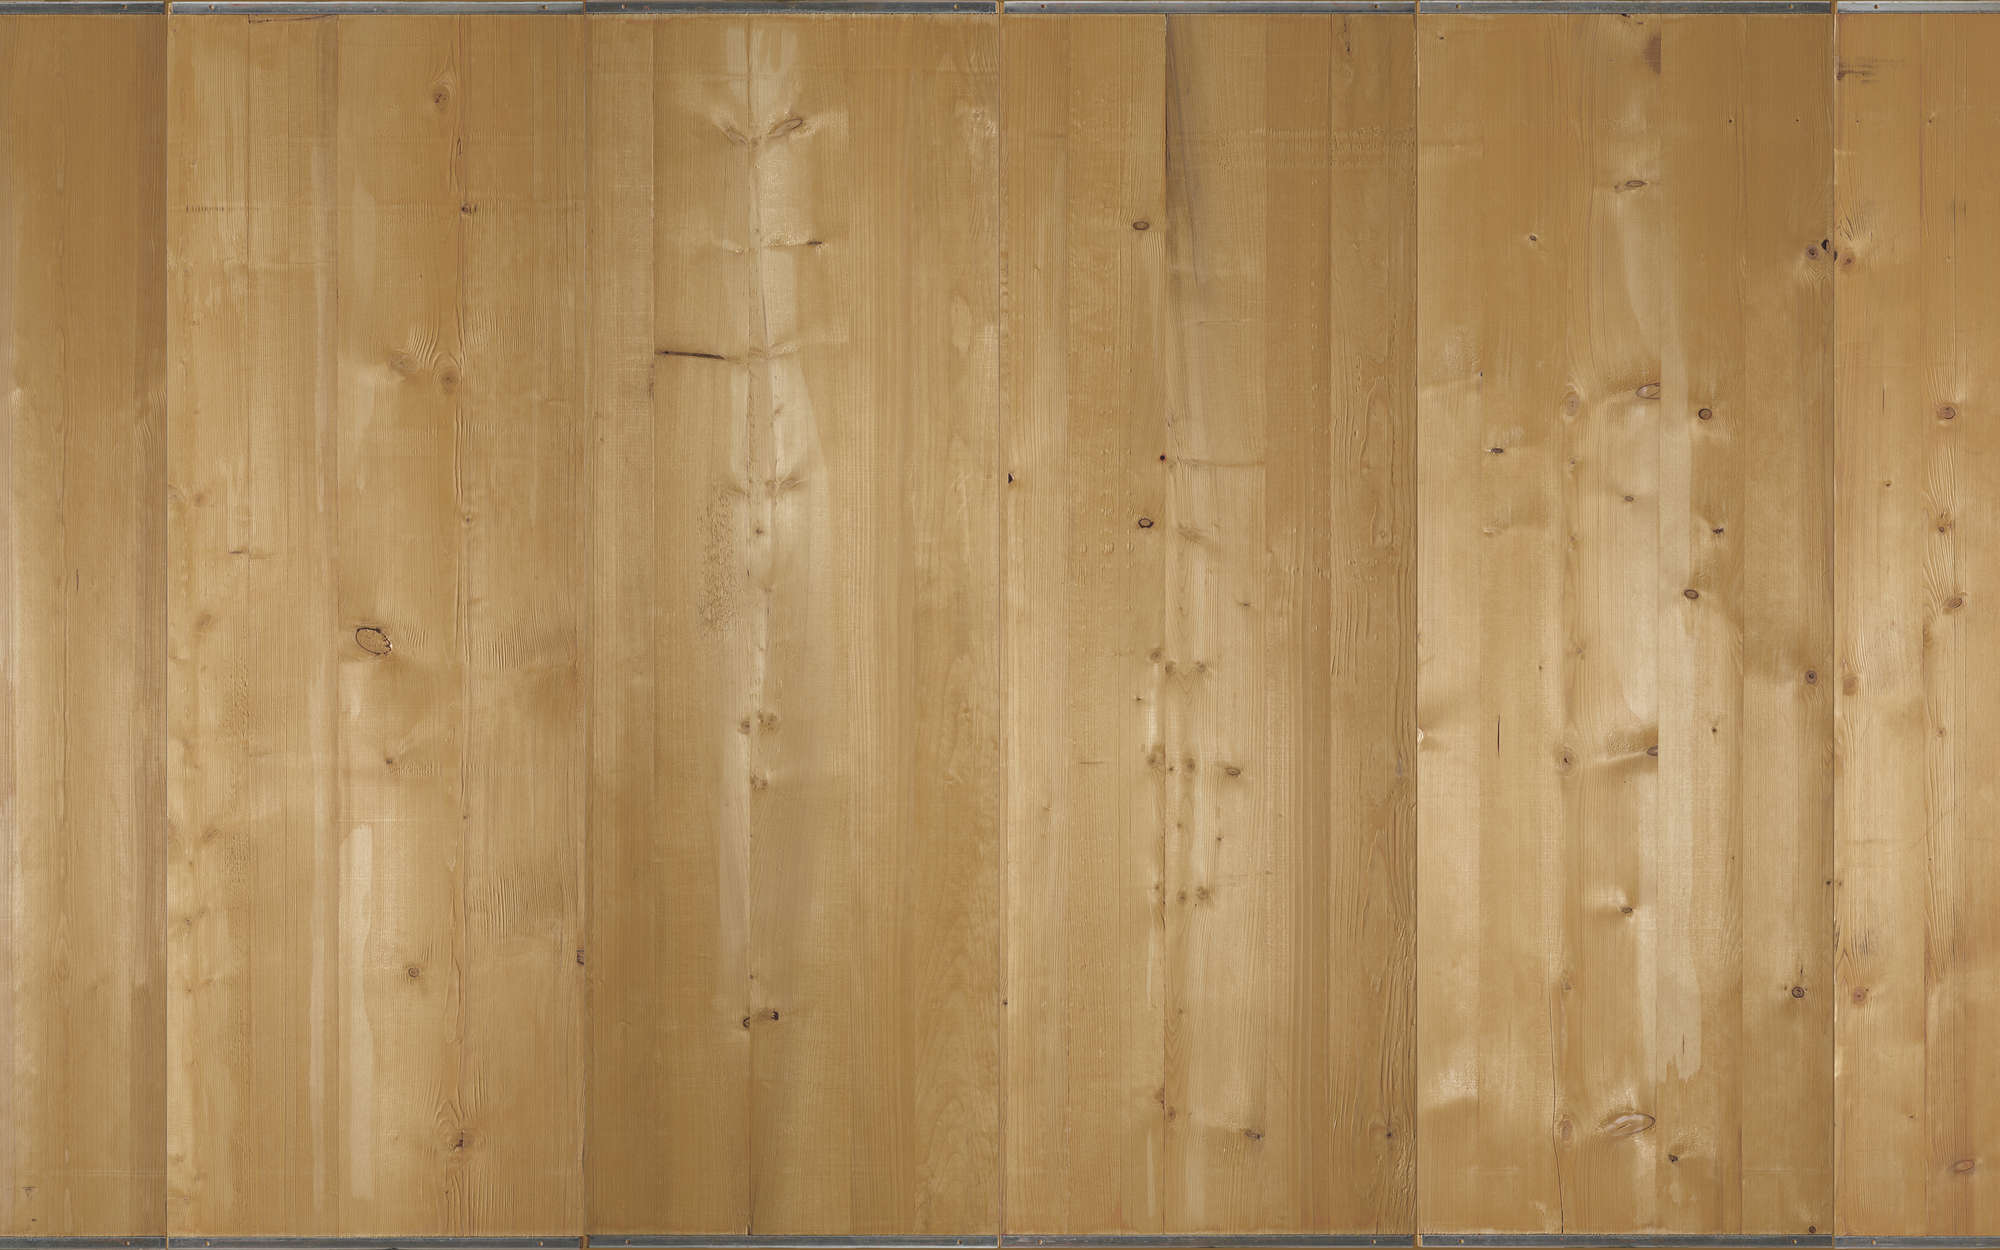             Fotomural tablones de madera clara - nácar liso
        